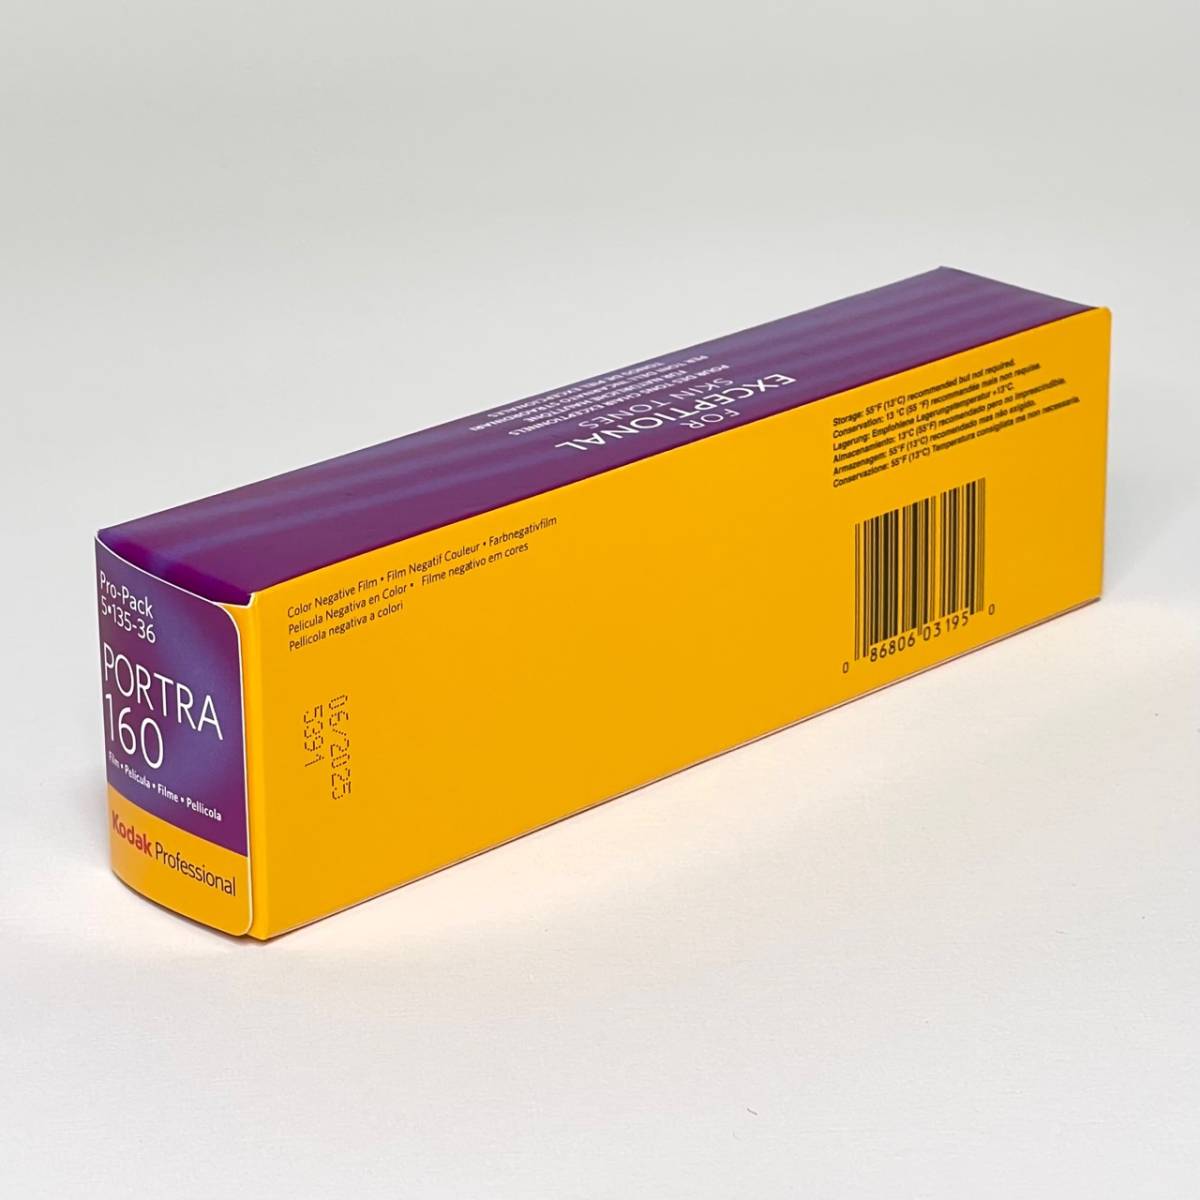 Kodak PORTRA160 135-36 5本パック期限2025年6月| JChere雅虎拍卖代购